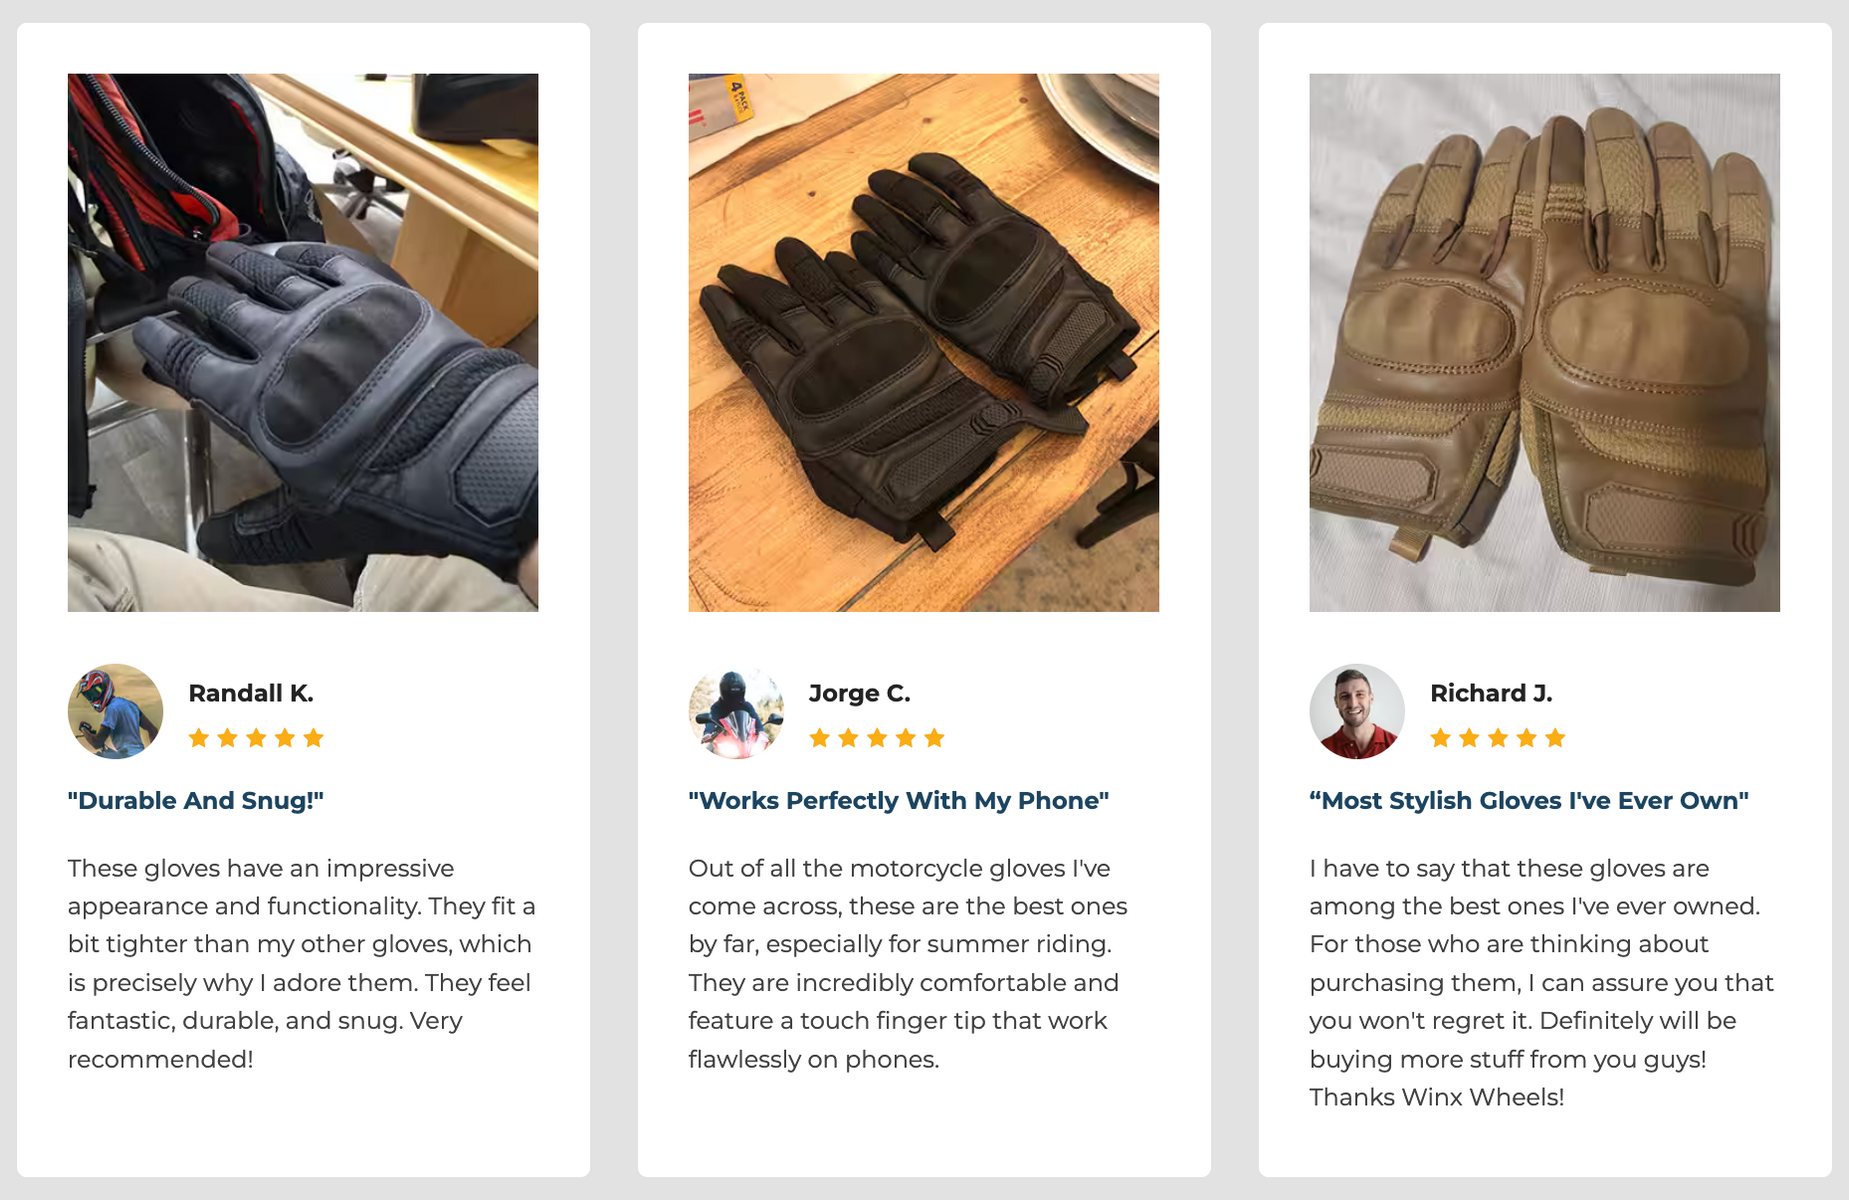 Winx Adapt Premium Leather Gloves Testimonials 2